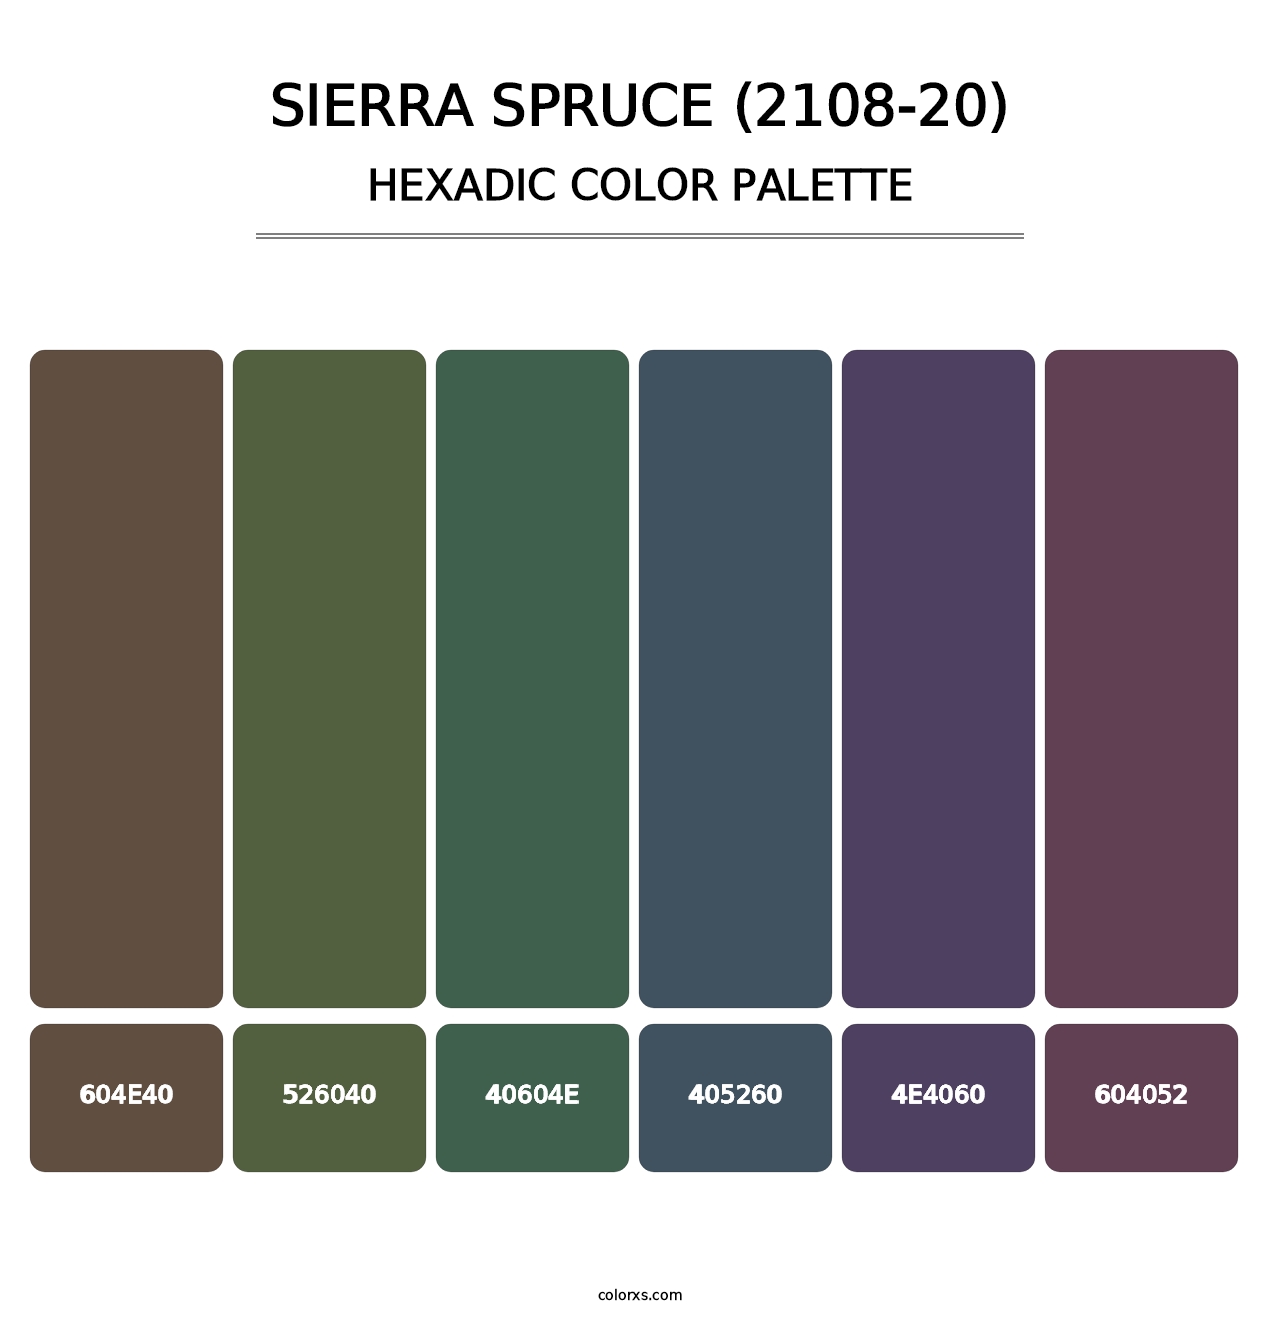 Sierra Spruce (2108-20) - Hexadic Color Palette